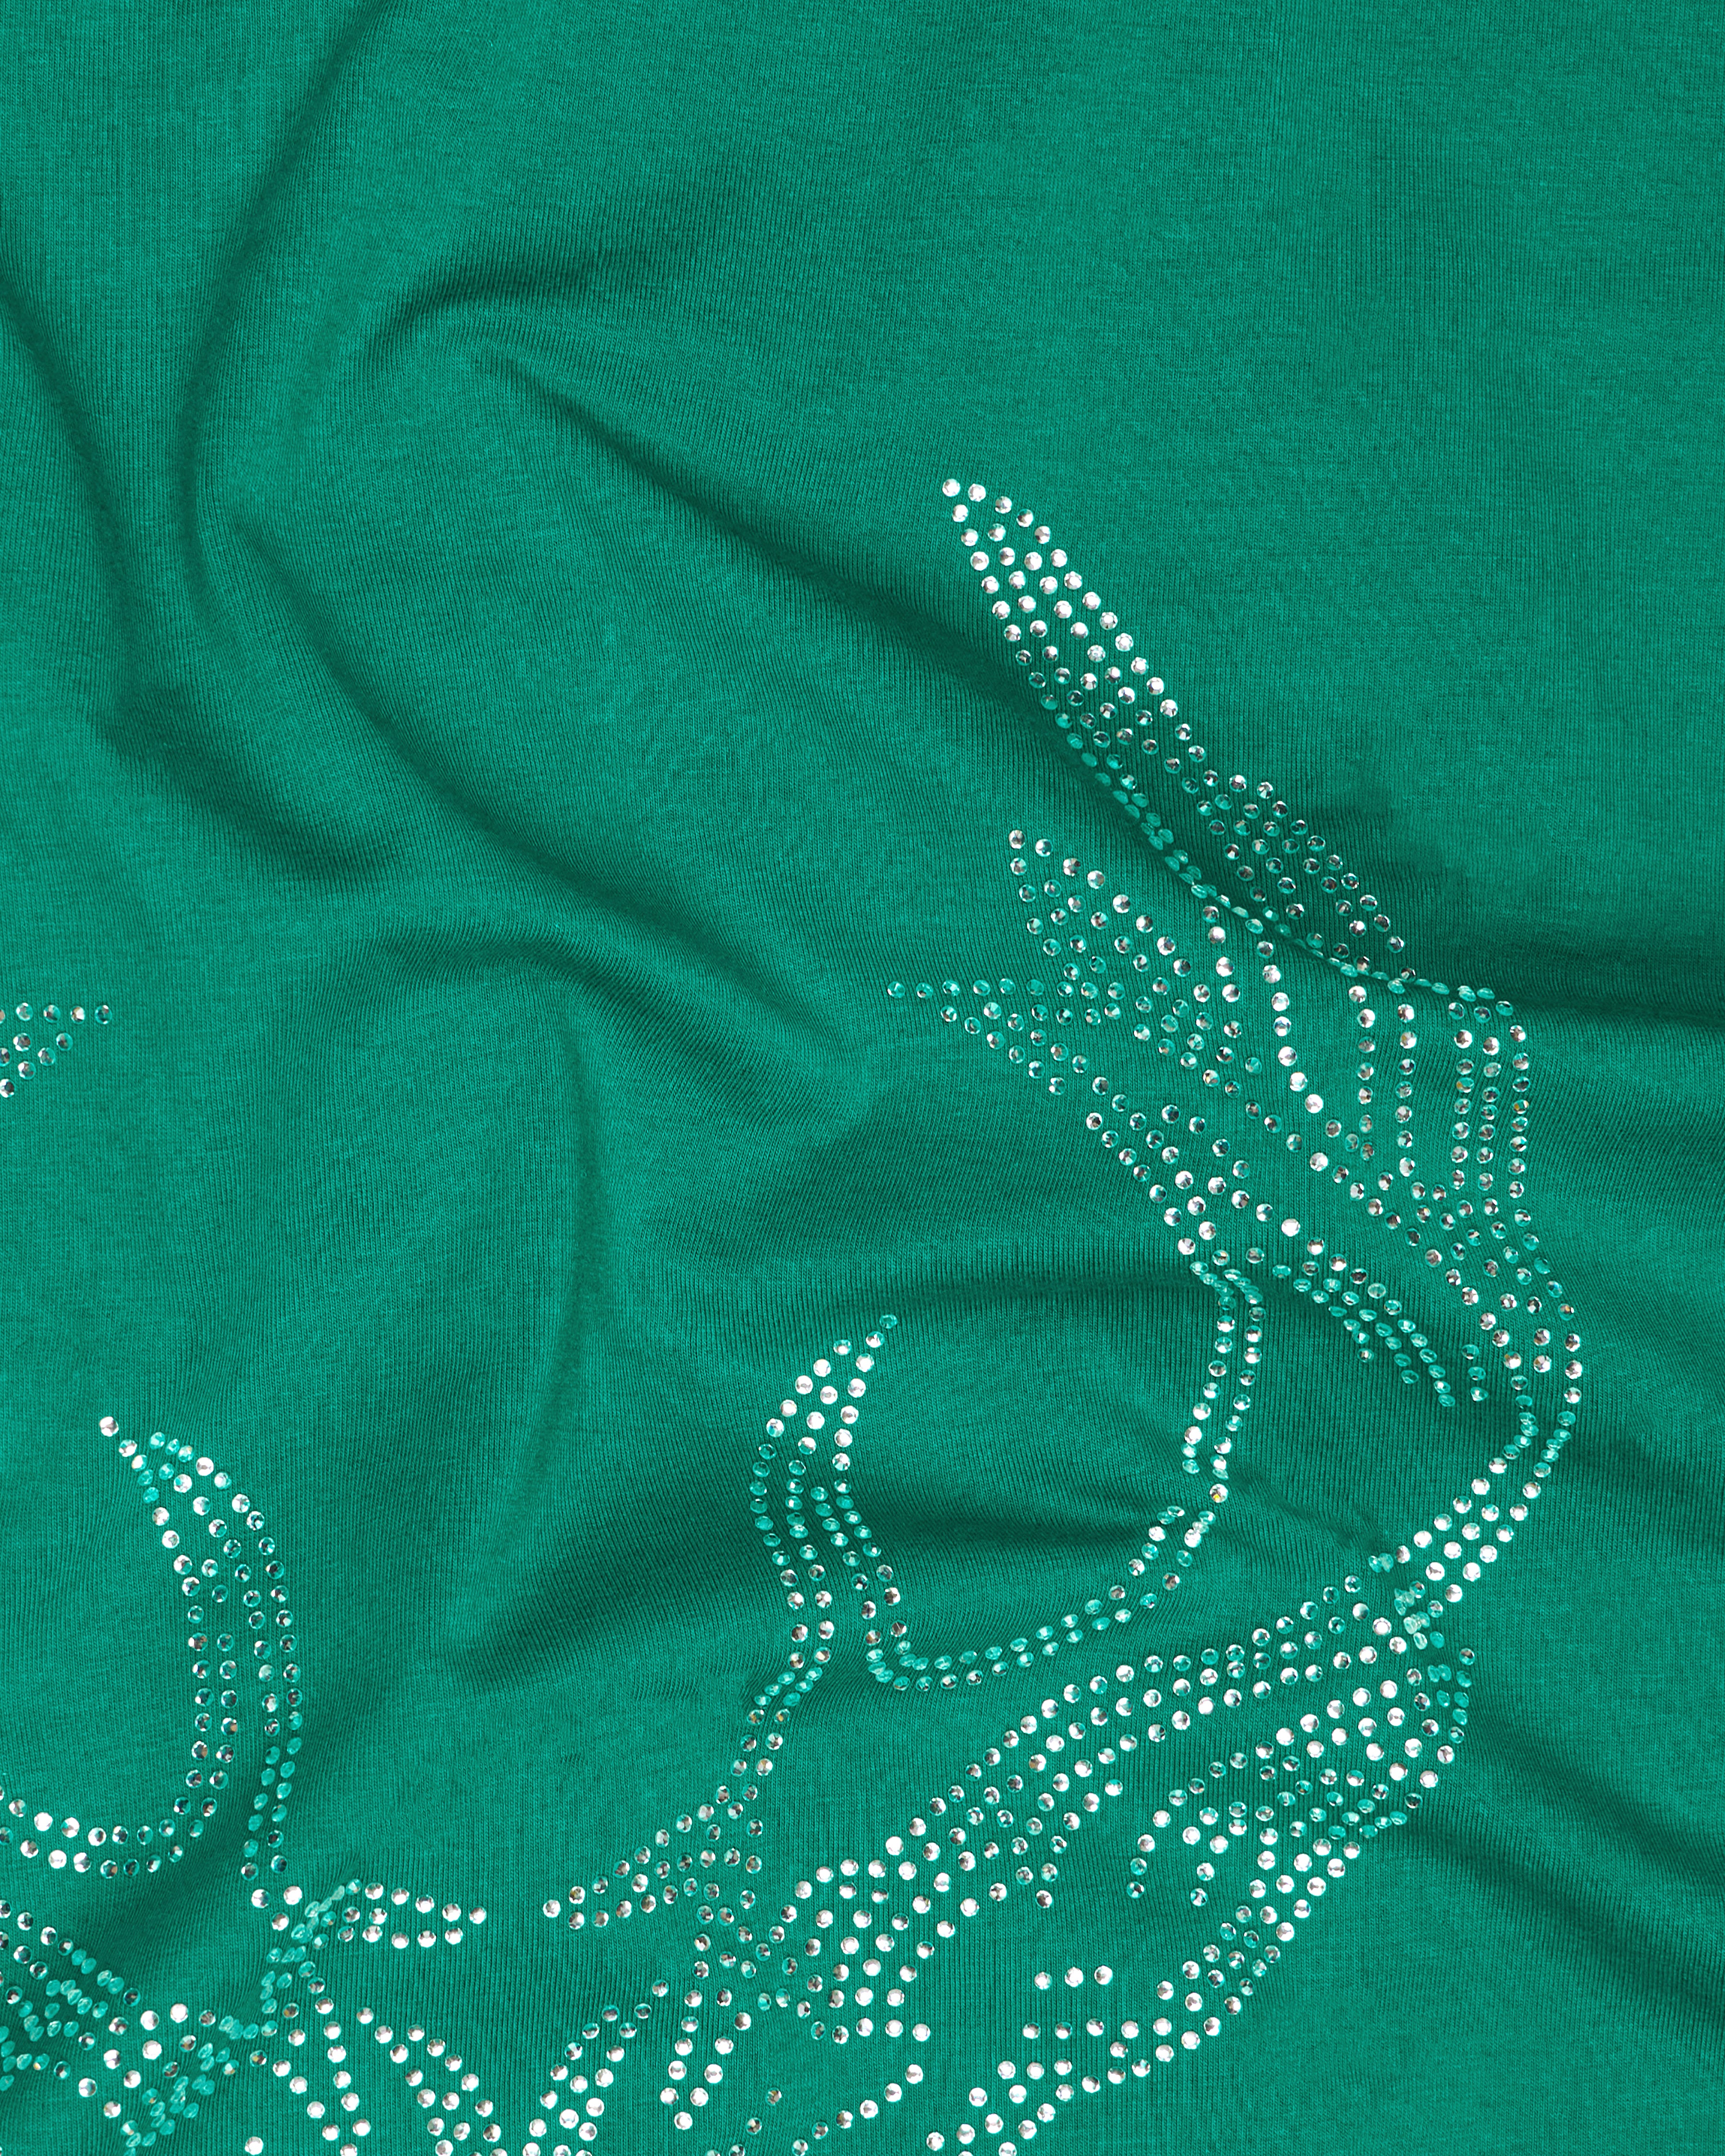 Tropical Green Tikki Work Premium Cotton T-shirt TS005-W013-S, TS005-W013-M, TS005-W013-L, TS005-W013-XL, TS005-W013-XXL